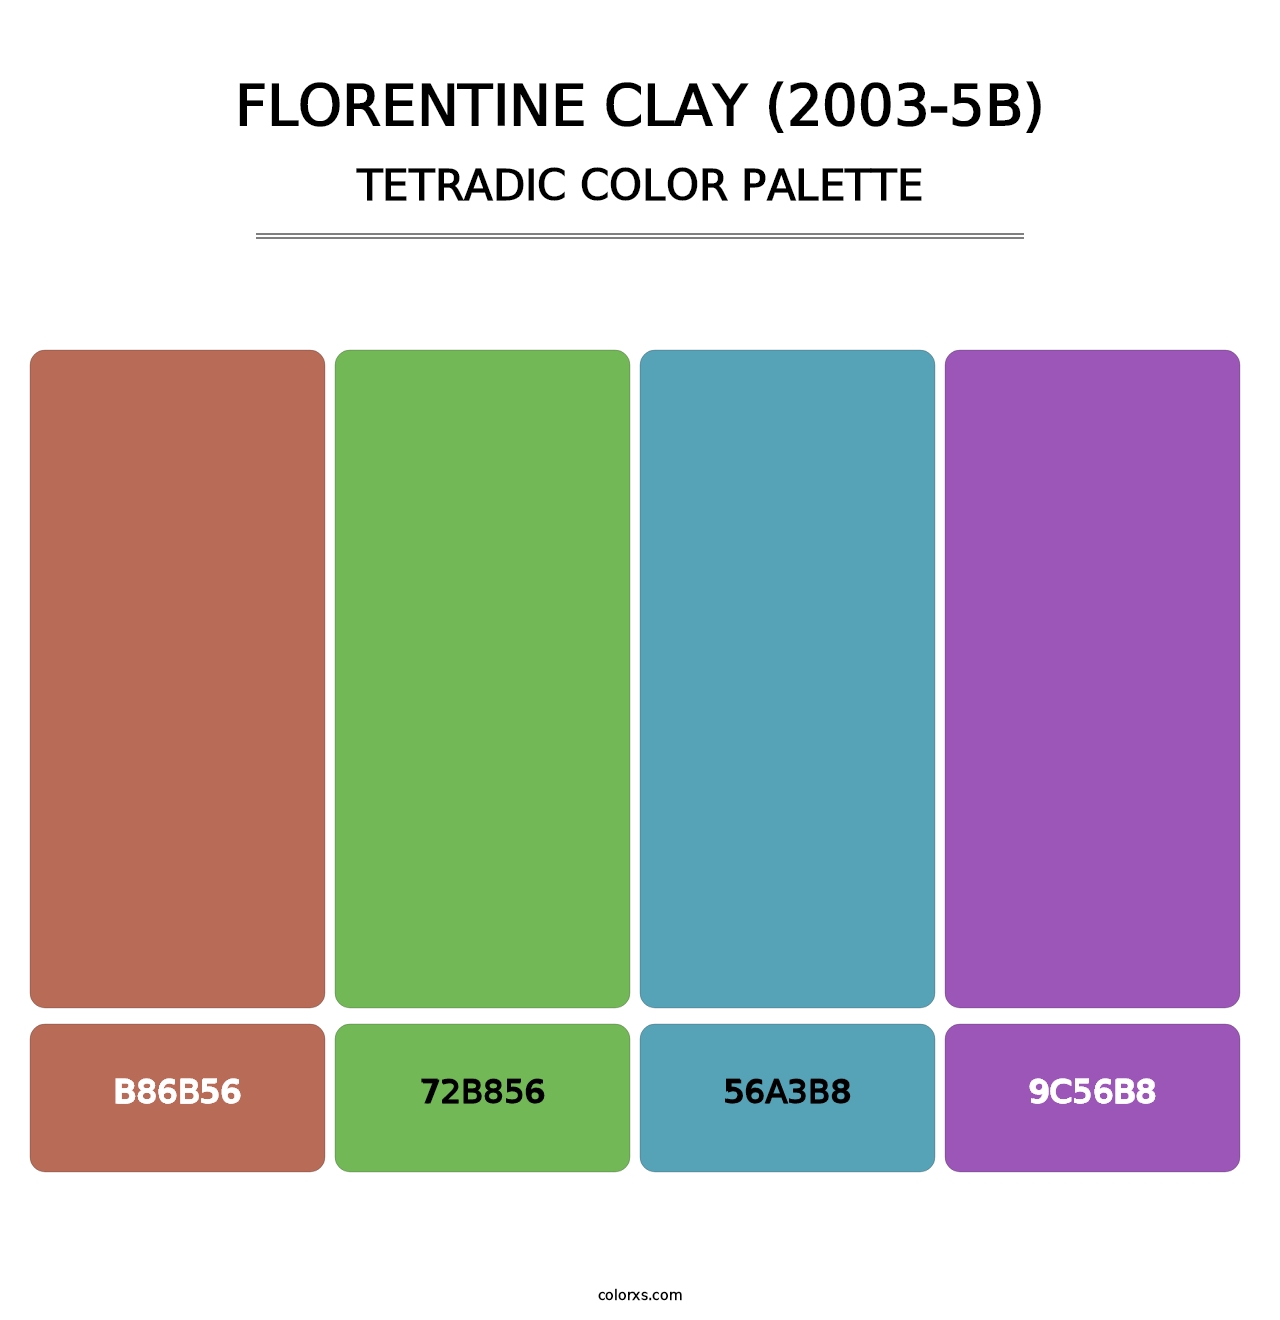 Florentine Clay (2003-5B) - Tetradic Color Palette